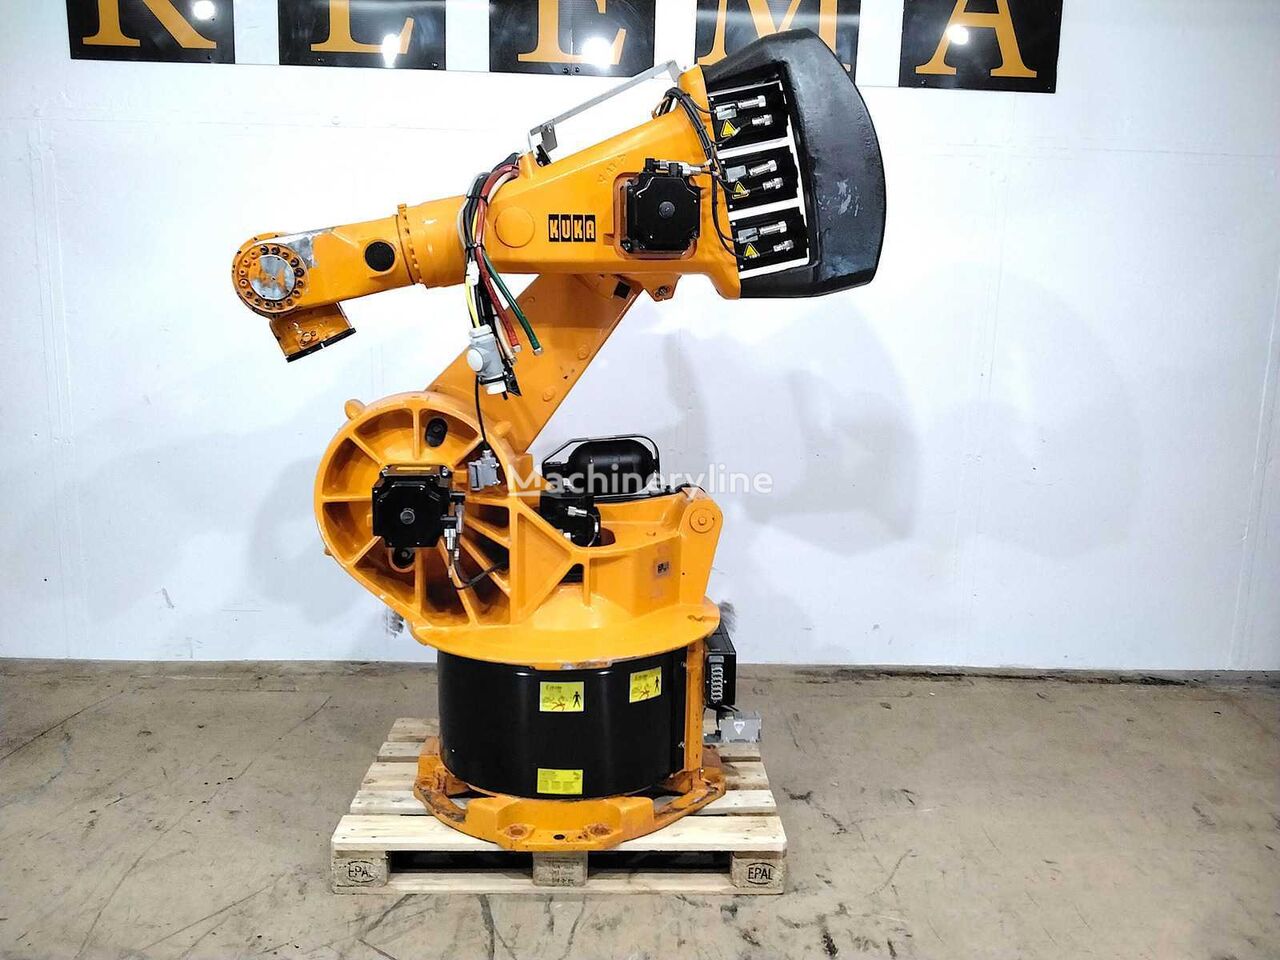 KUKA KR C1 200 2 TJ industrial robot